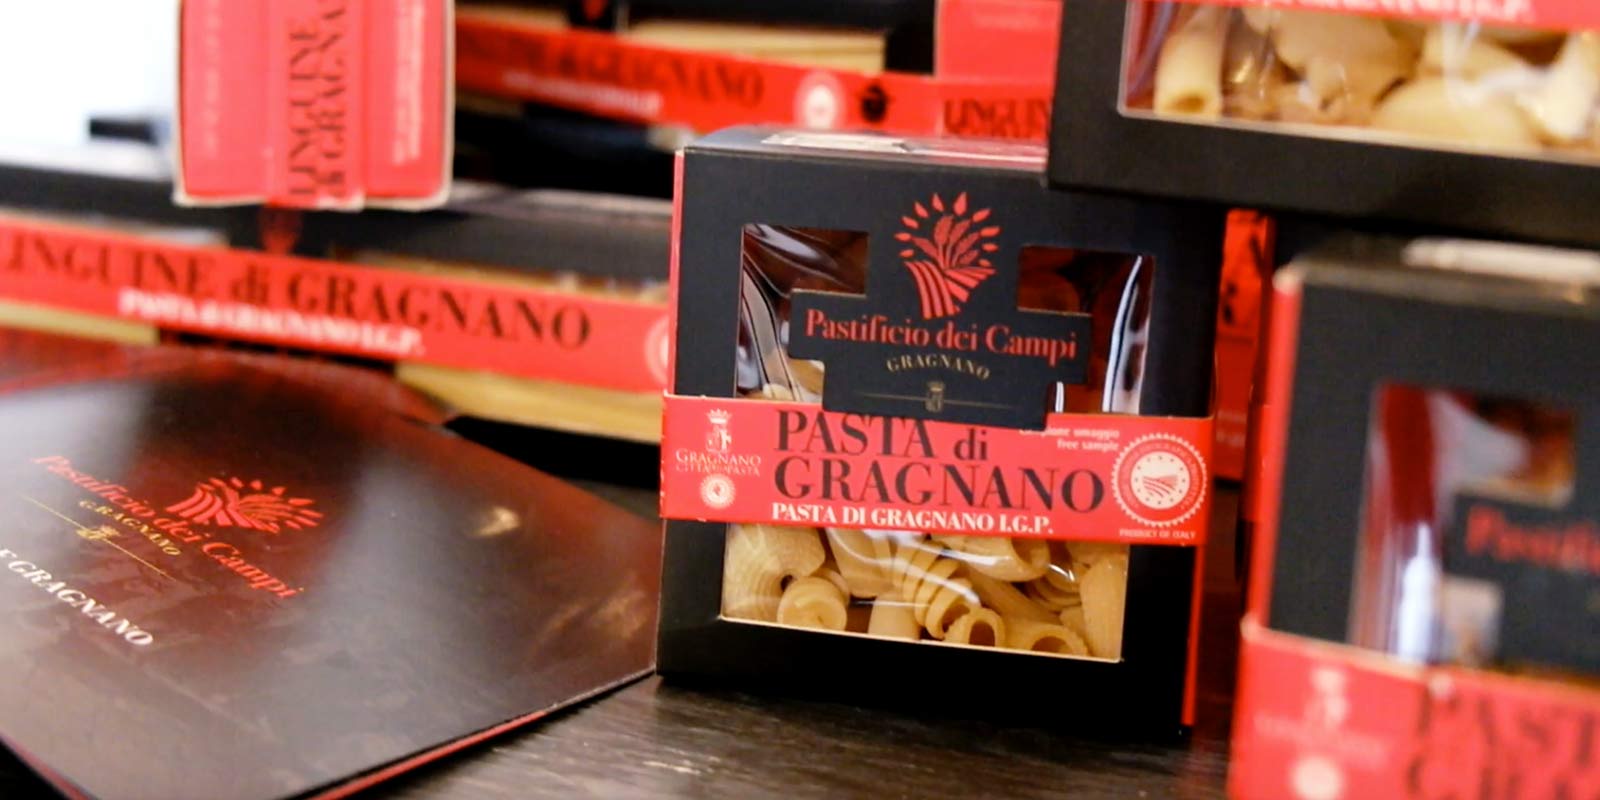 Pastifico dei Campi - Pasta di Gragnano IGP Pastificio dei Campi produkuje nektere italske klasiky a nektere originalni vytvory. Testoviny jsou vyrobeny ze 100% italske semoliny z tvrde psenice a vytlacovany pomoci bronzovych forem.